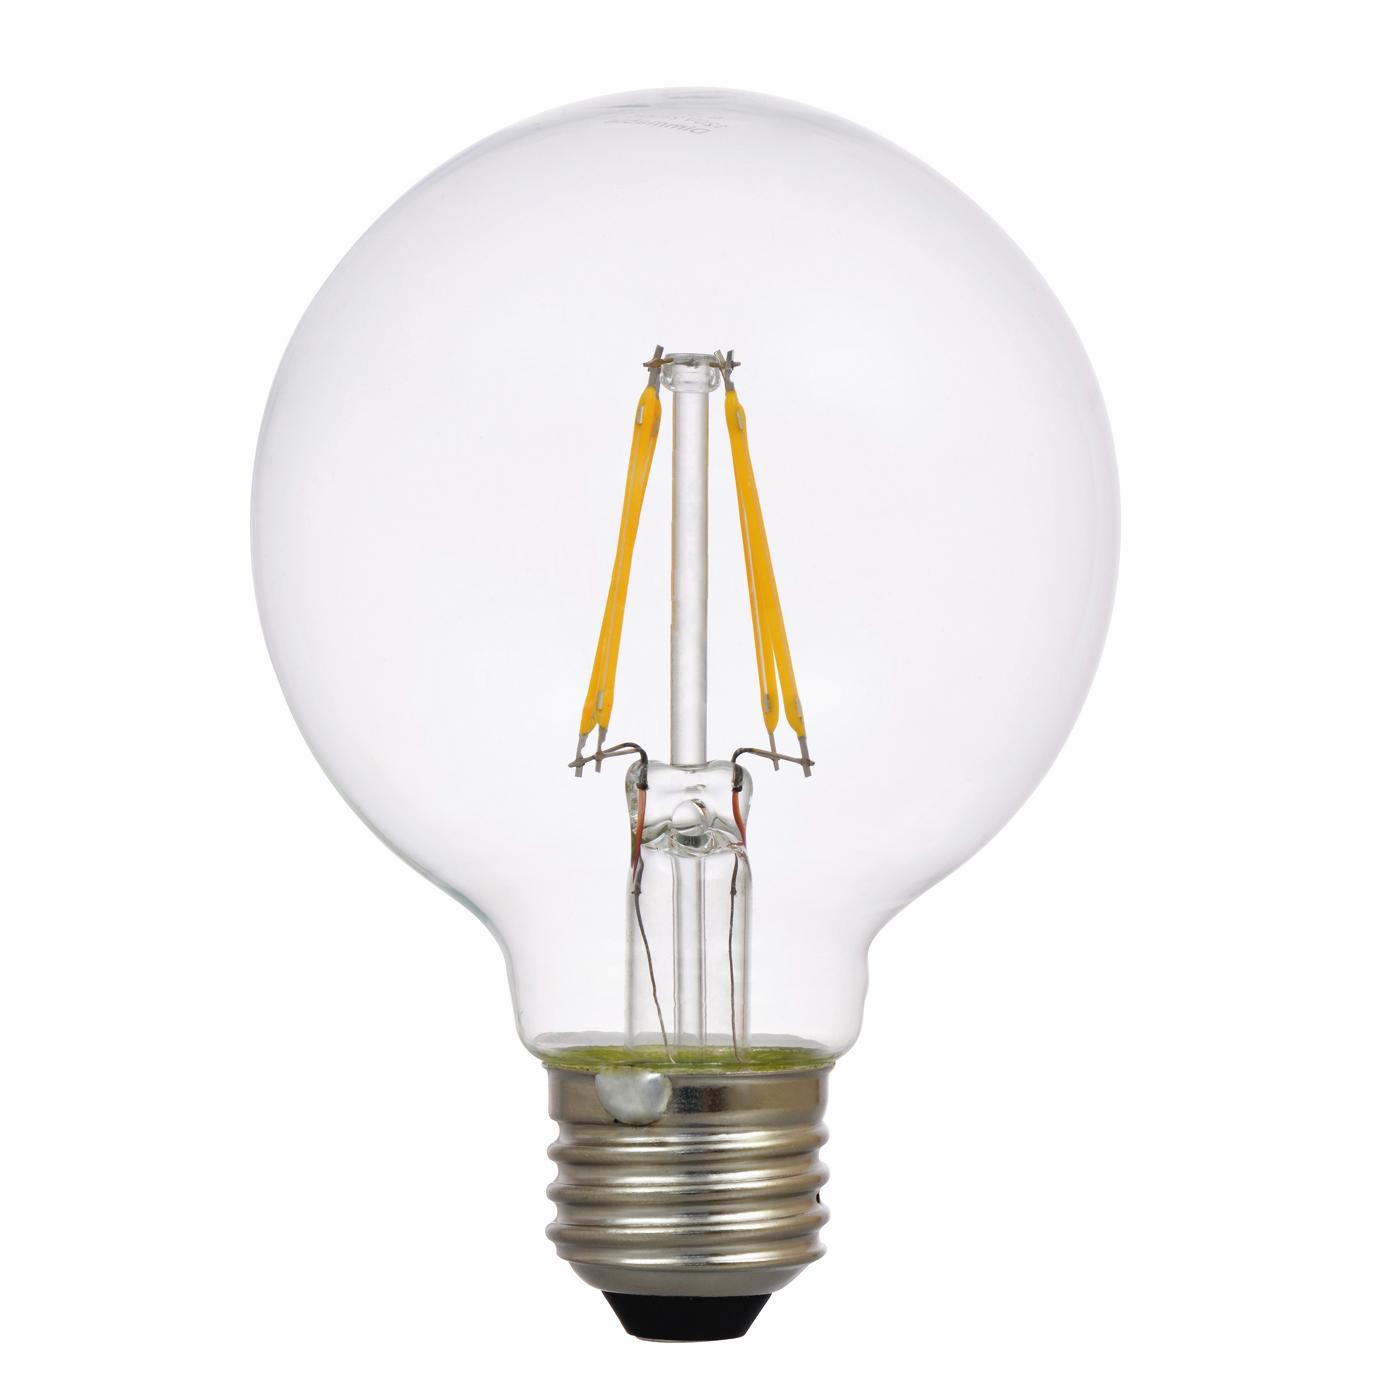 Sylvania TruWave G25 40-Watt Clear LED Light Bulbs - Daylight; image 2 of 3